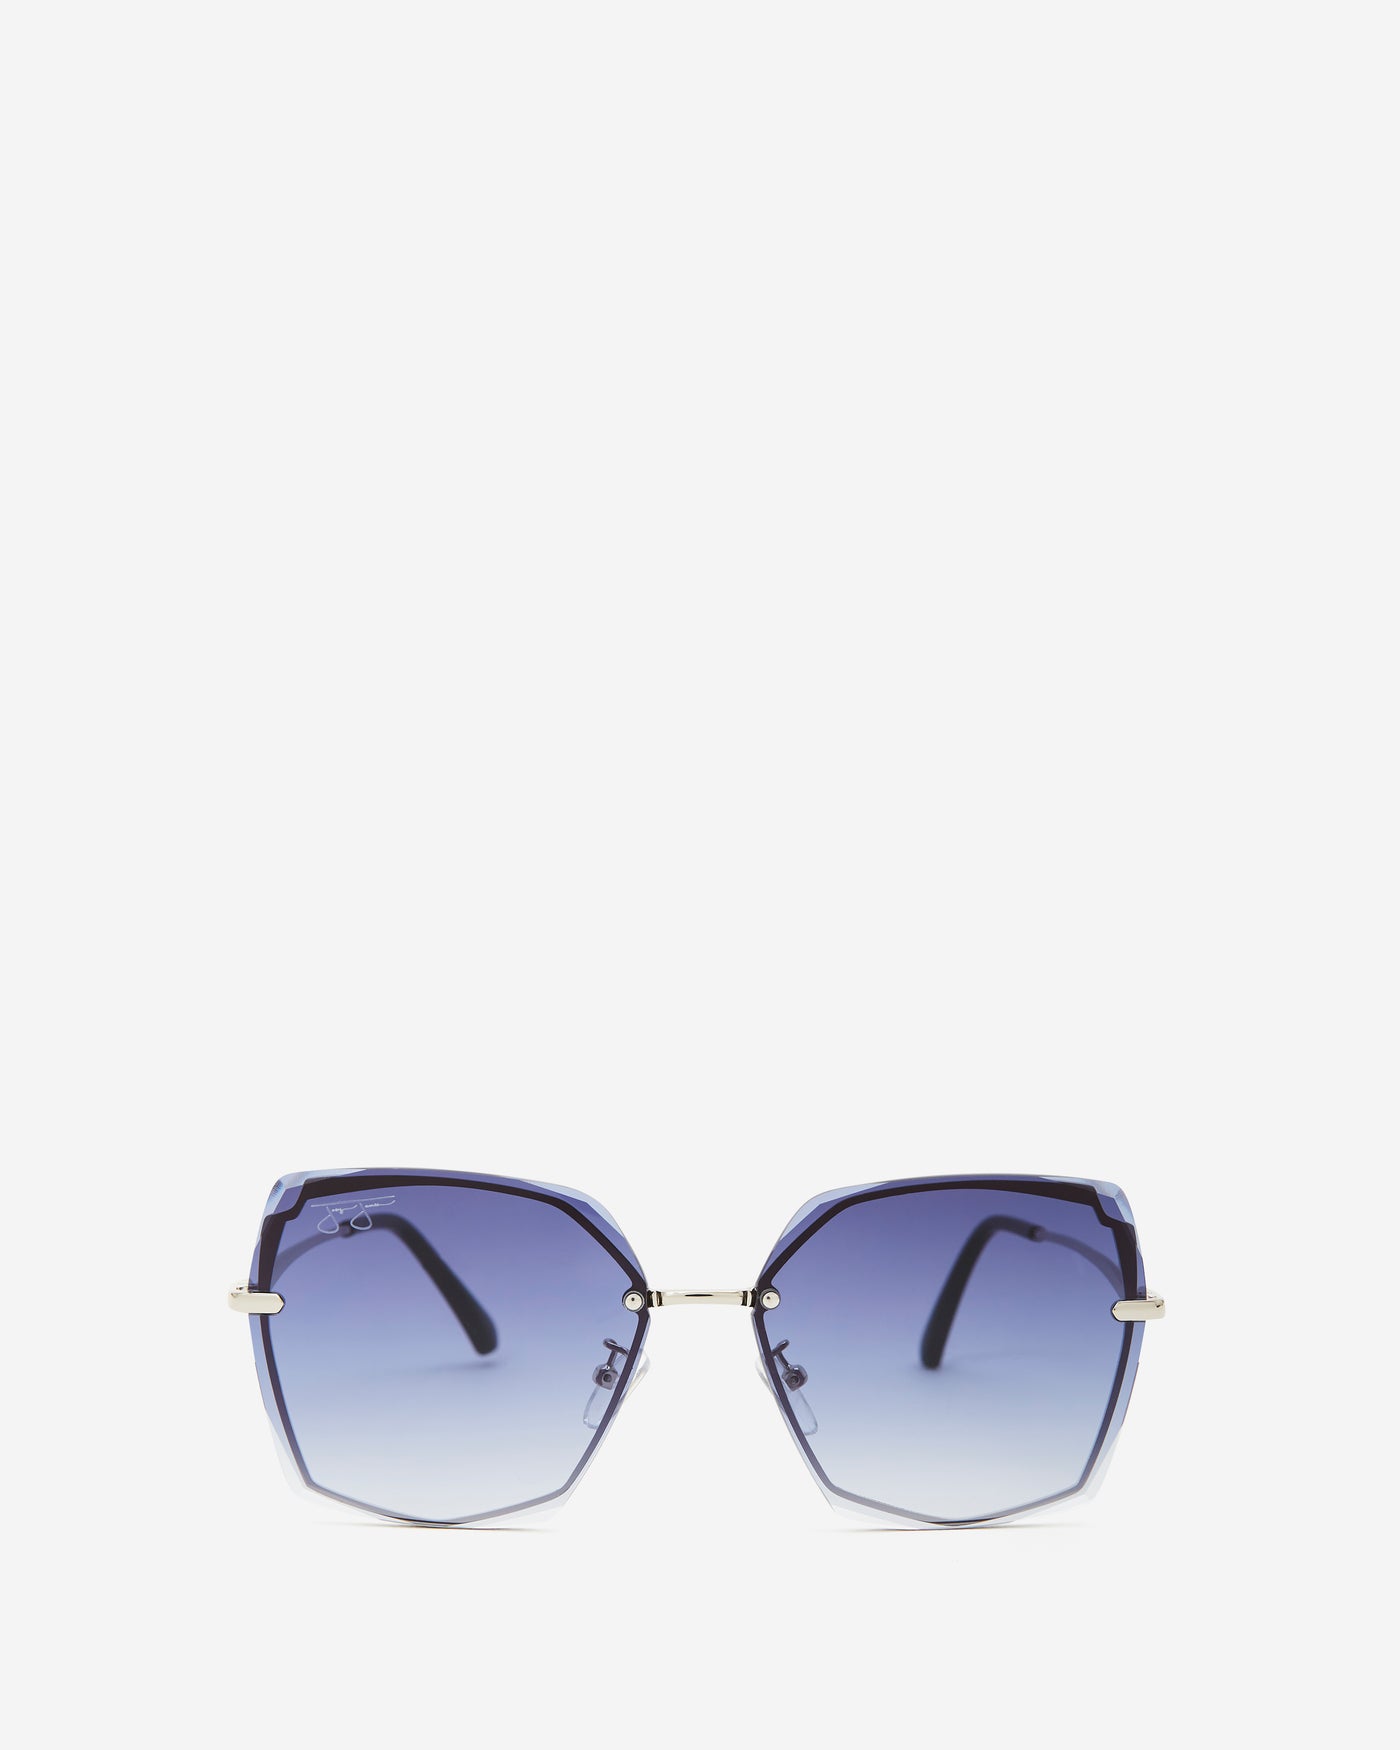 Hexagonal Metal Frame Sunglasses - Black Frame with Blue Smoke Lens Sunglasses Joey James, The Label   